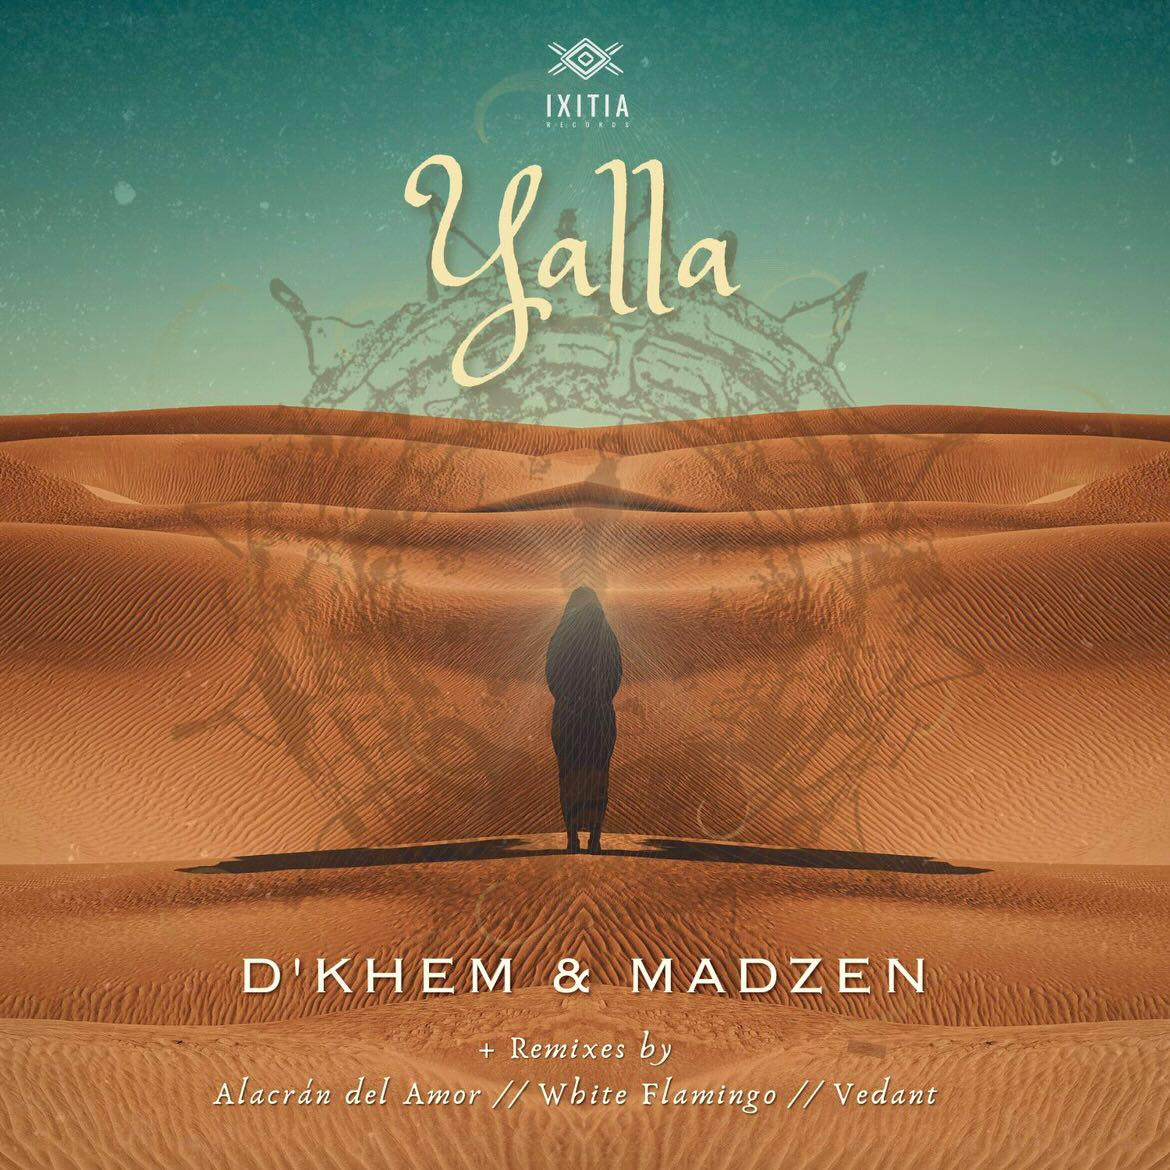 D’Khem & MadZen’s powerful new single “Yalla”